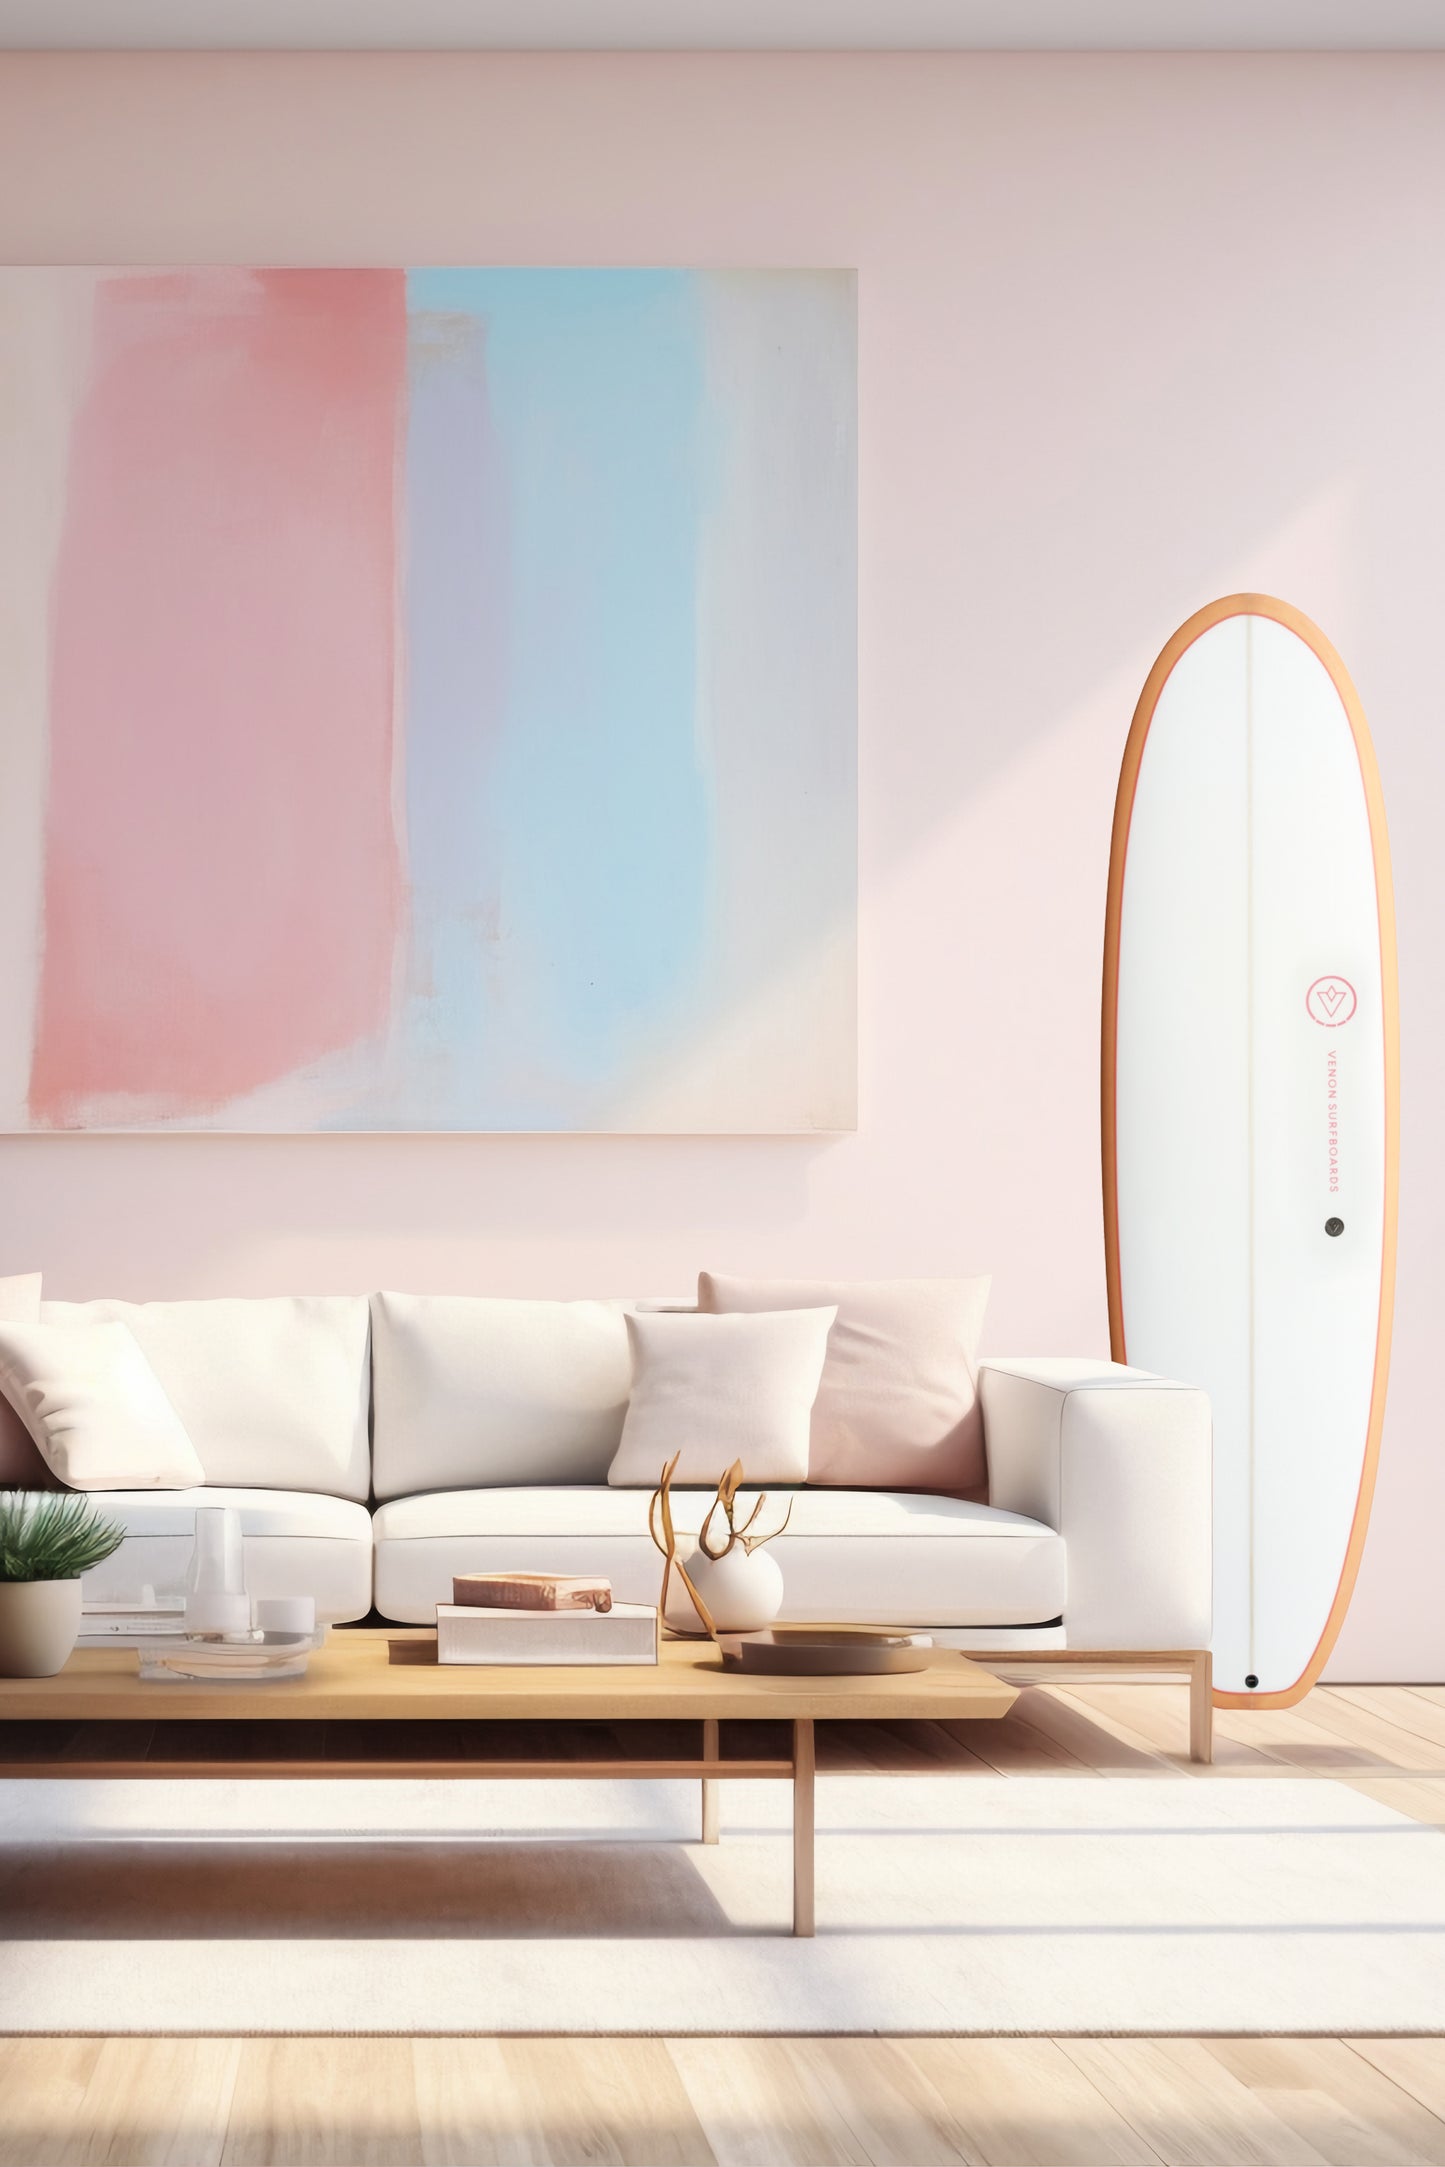 Dekoration Surfbrett – <tc>Evo</tc> – White Deck Pink